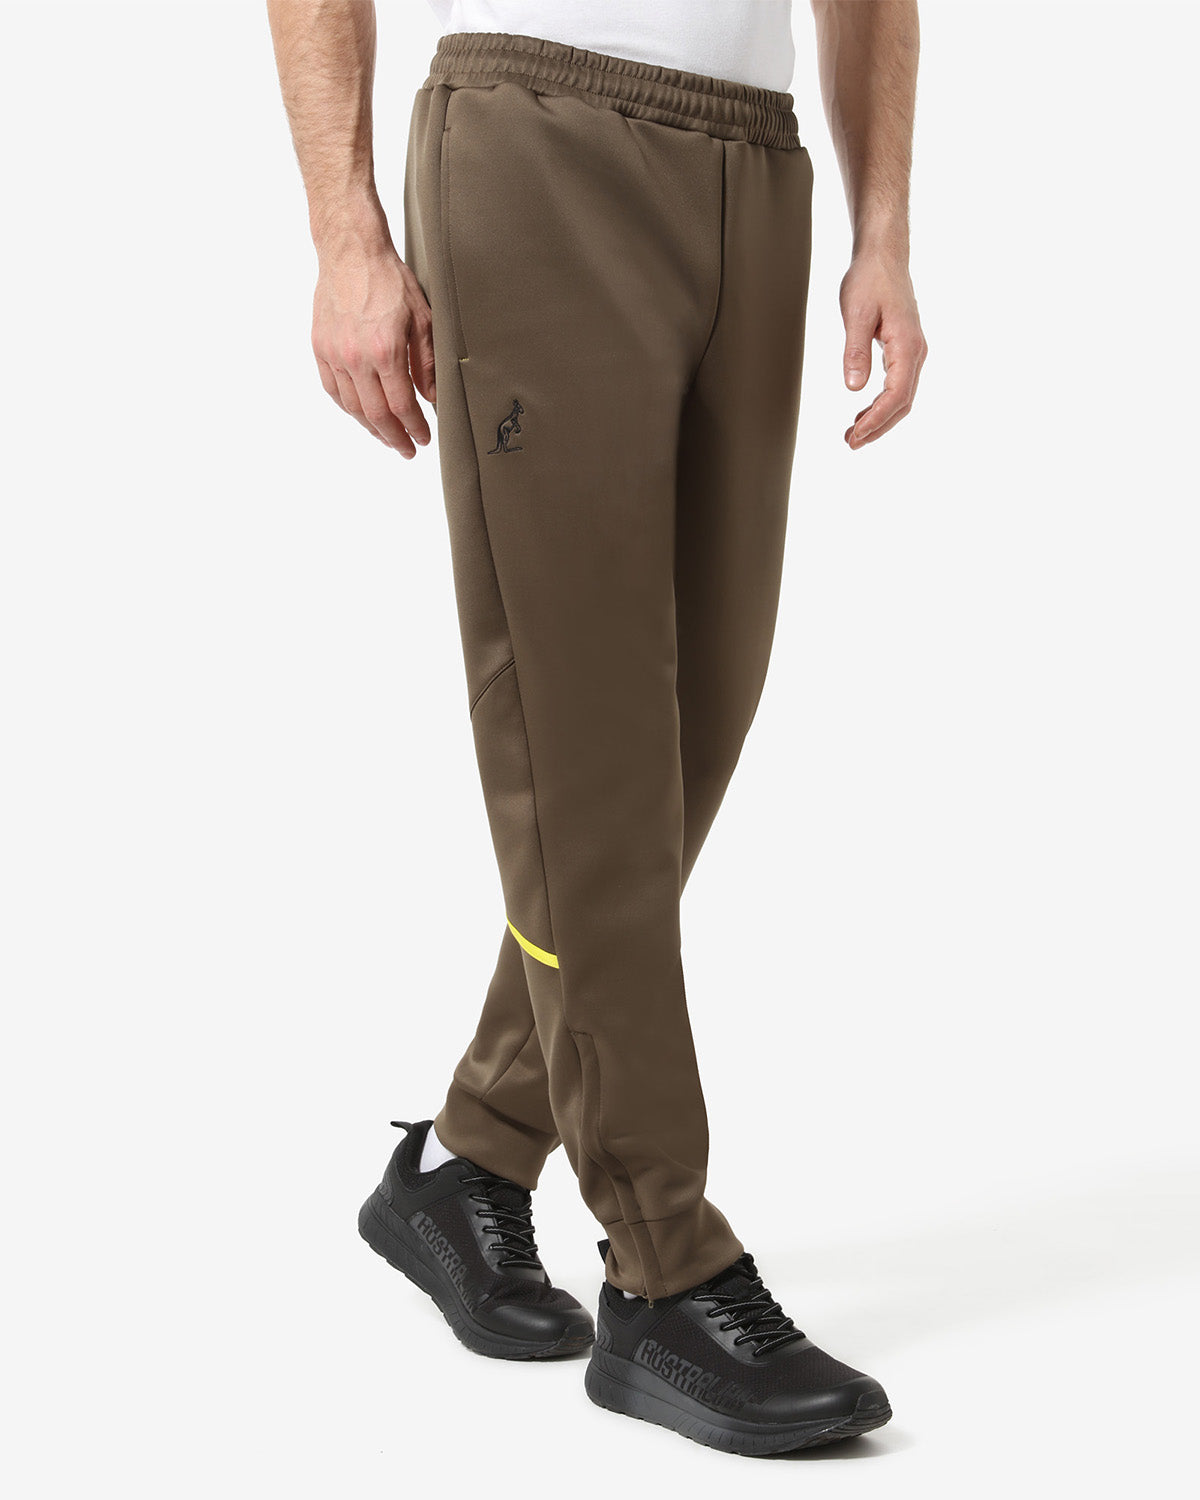 G. PANT COURT Tennis trousers - Junior - Diadora Online Store IN